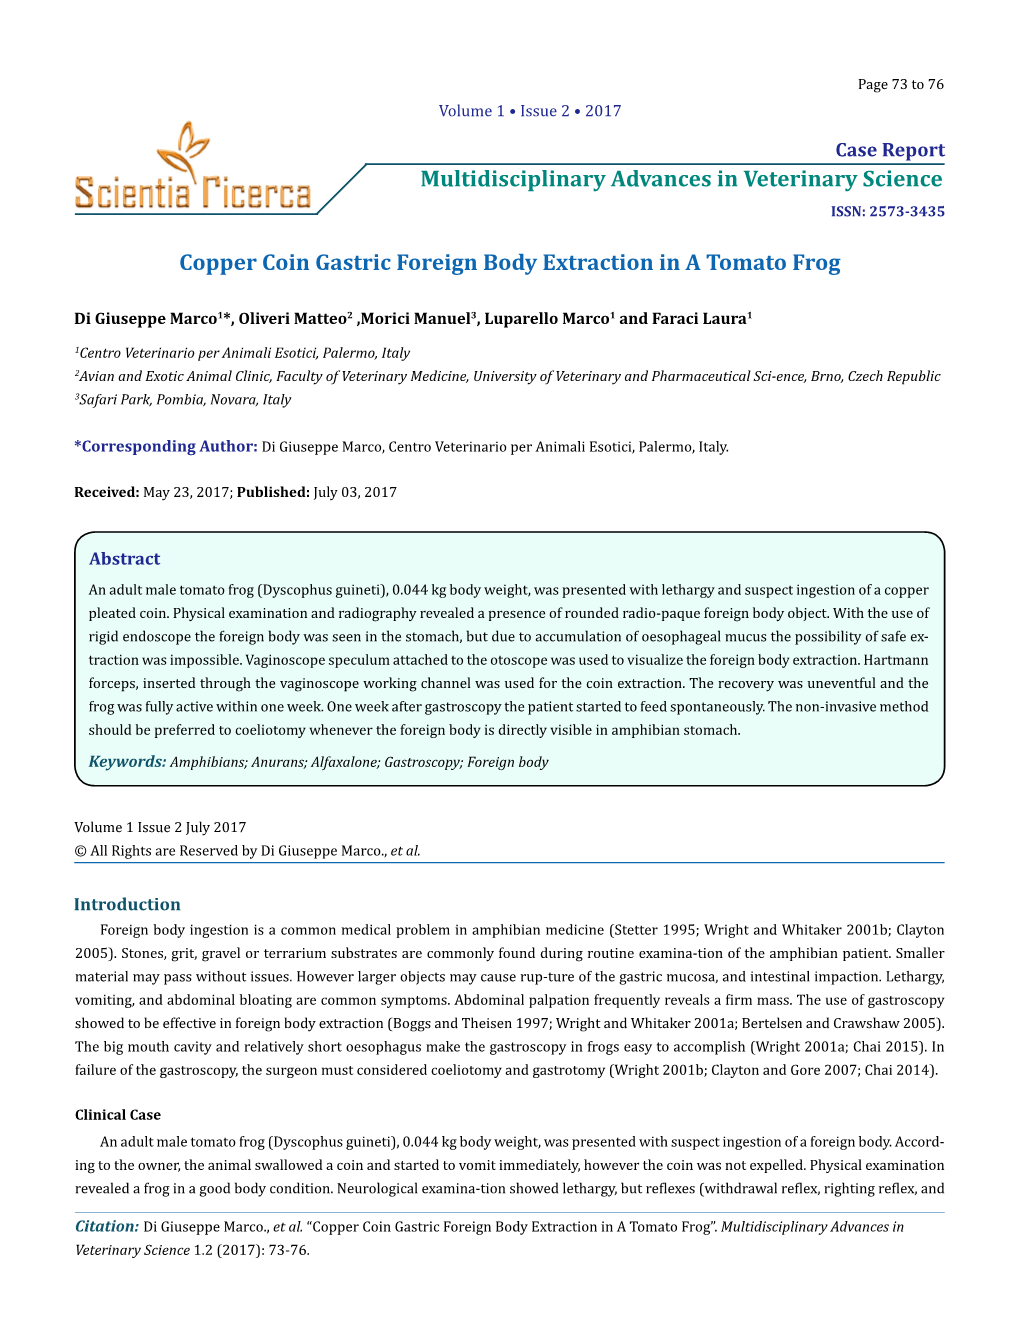 Multidisciplinary Advances in Veterinary Science ISSN: 2573-3435